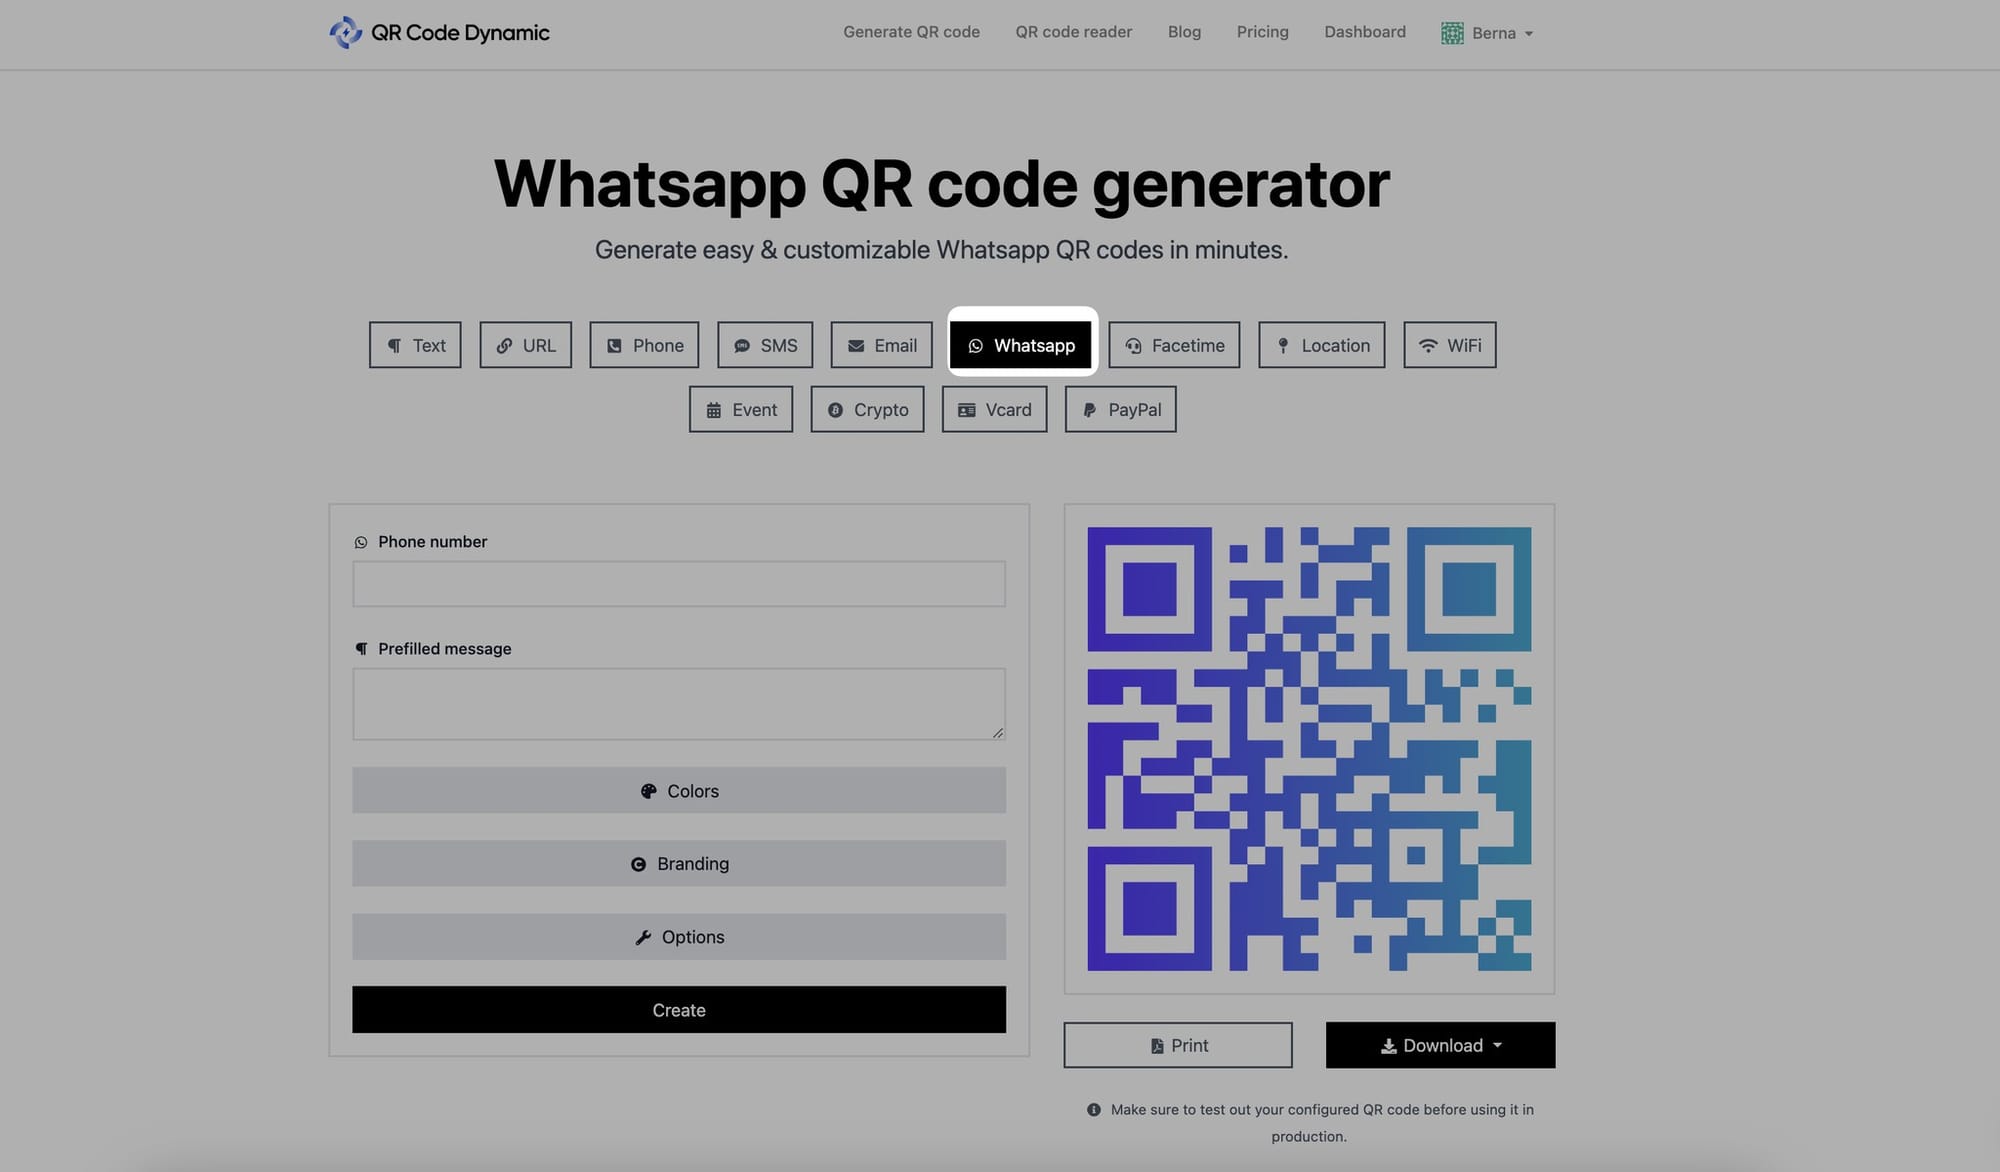 selecting whatsapp qr code